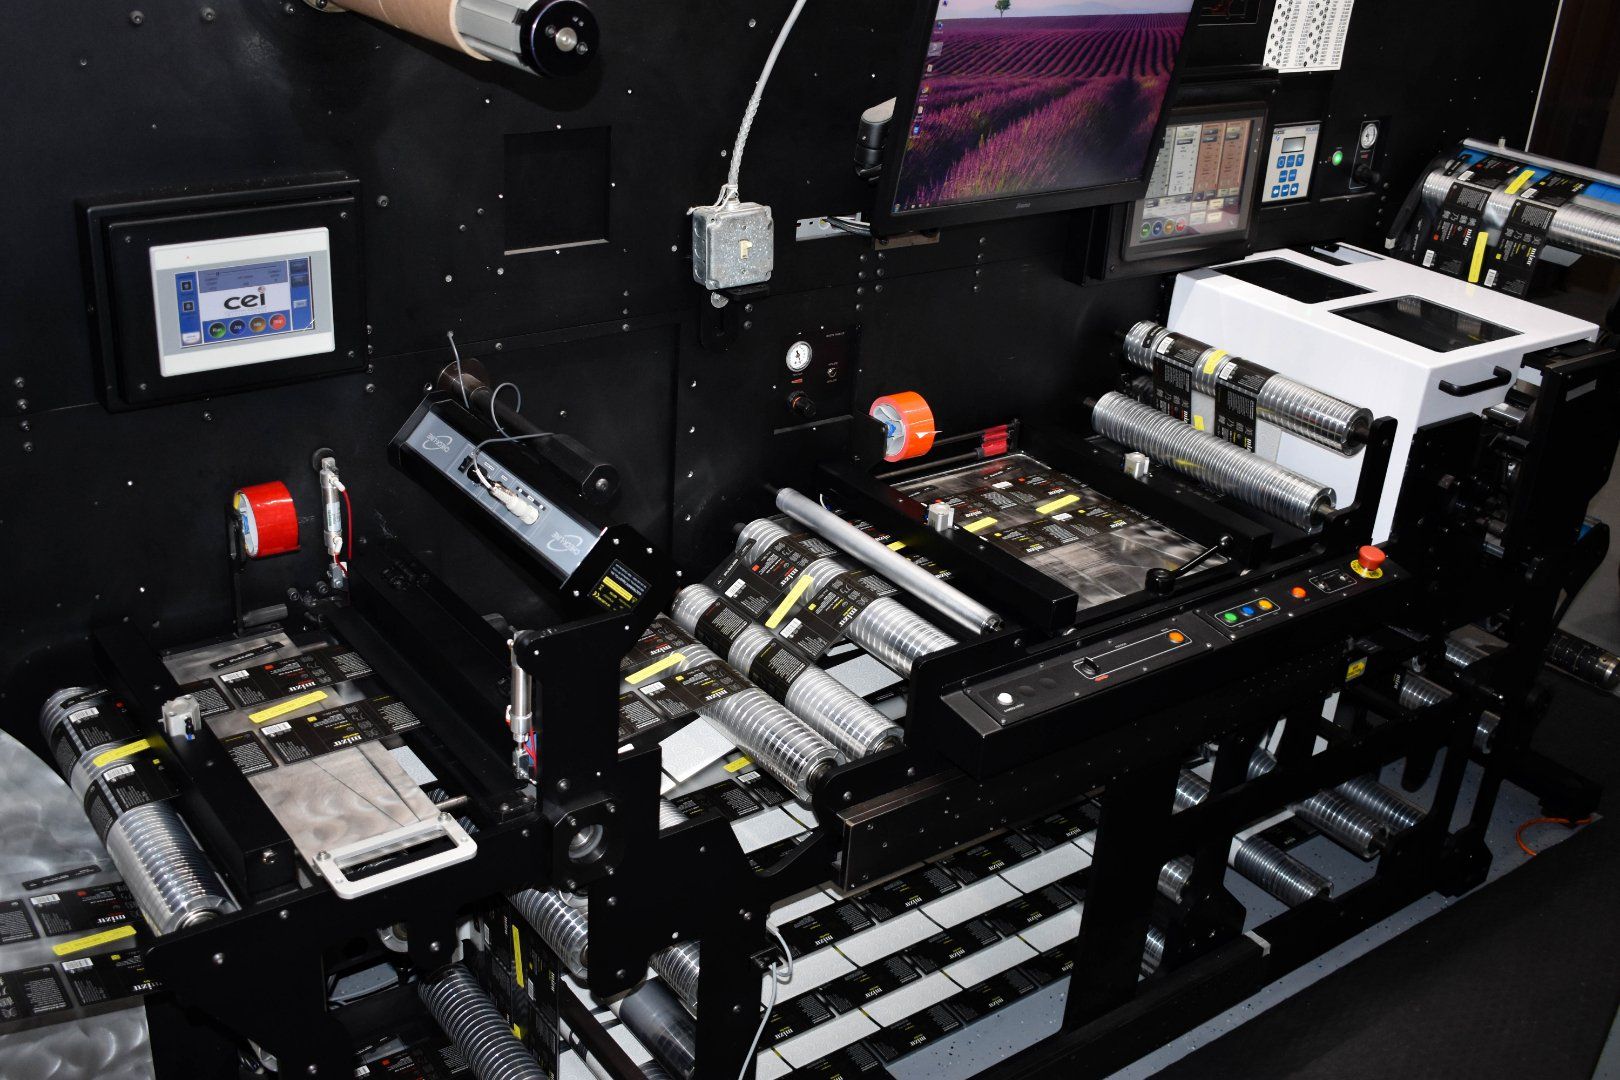 Inspection Machine running labels